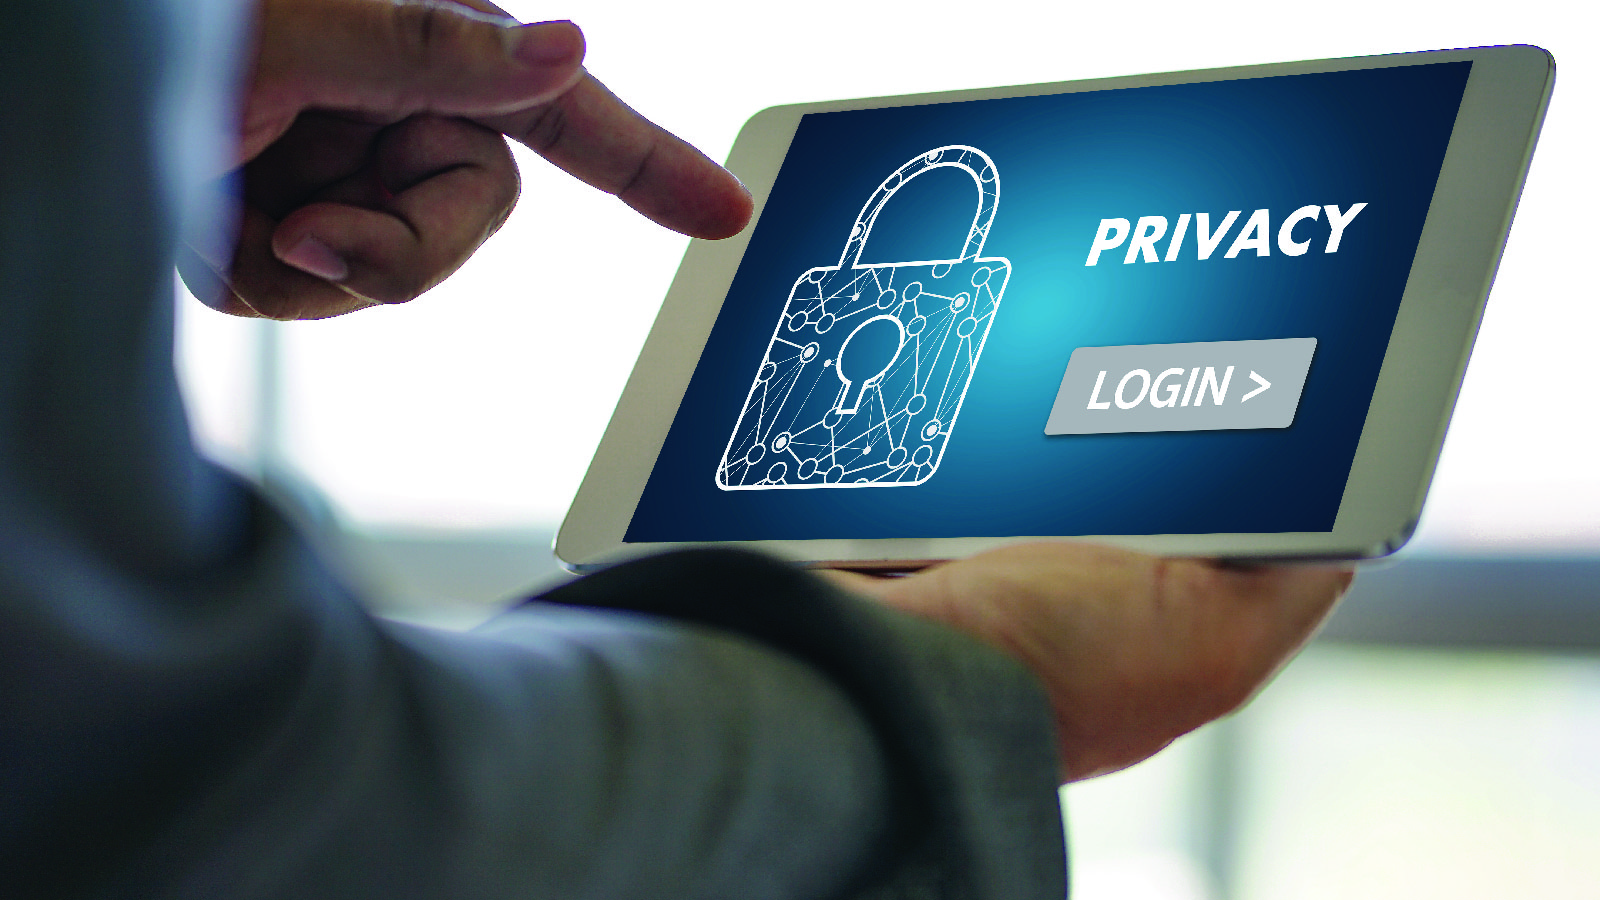 Private login. Dataguise DGSECURE. Data privacy. Access login. Private access.